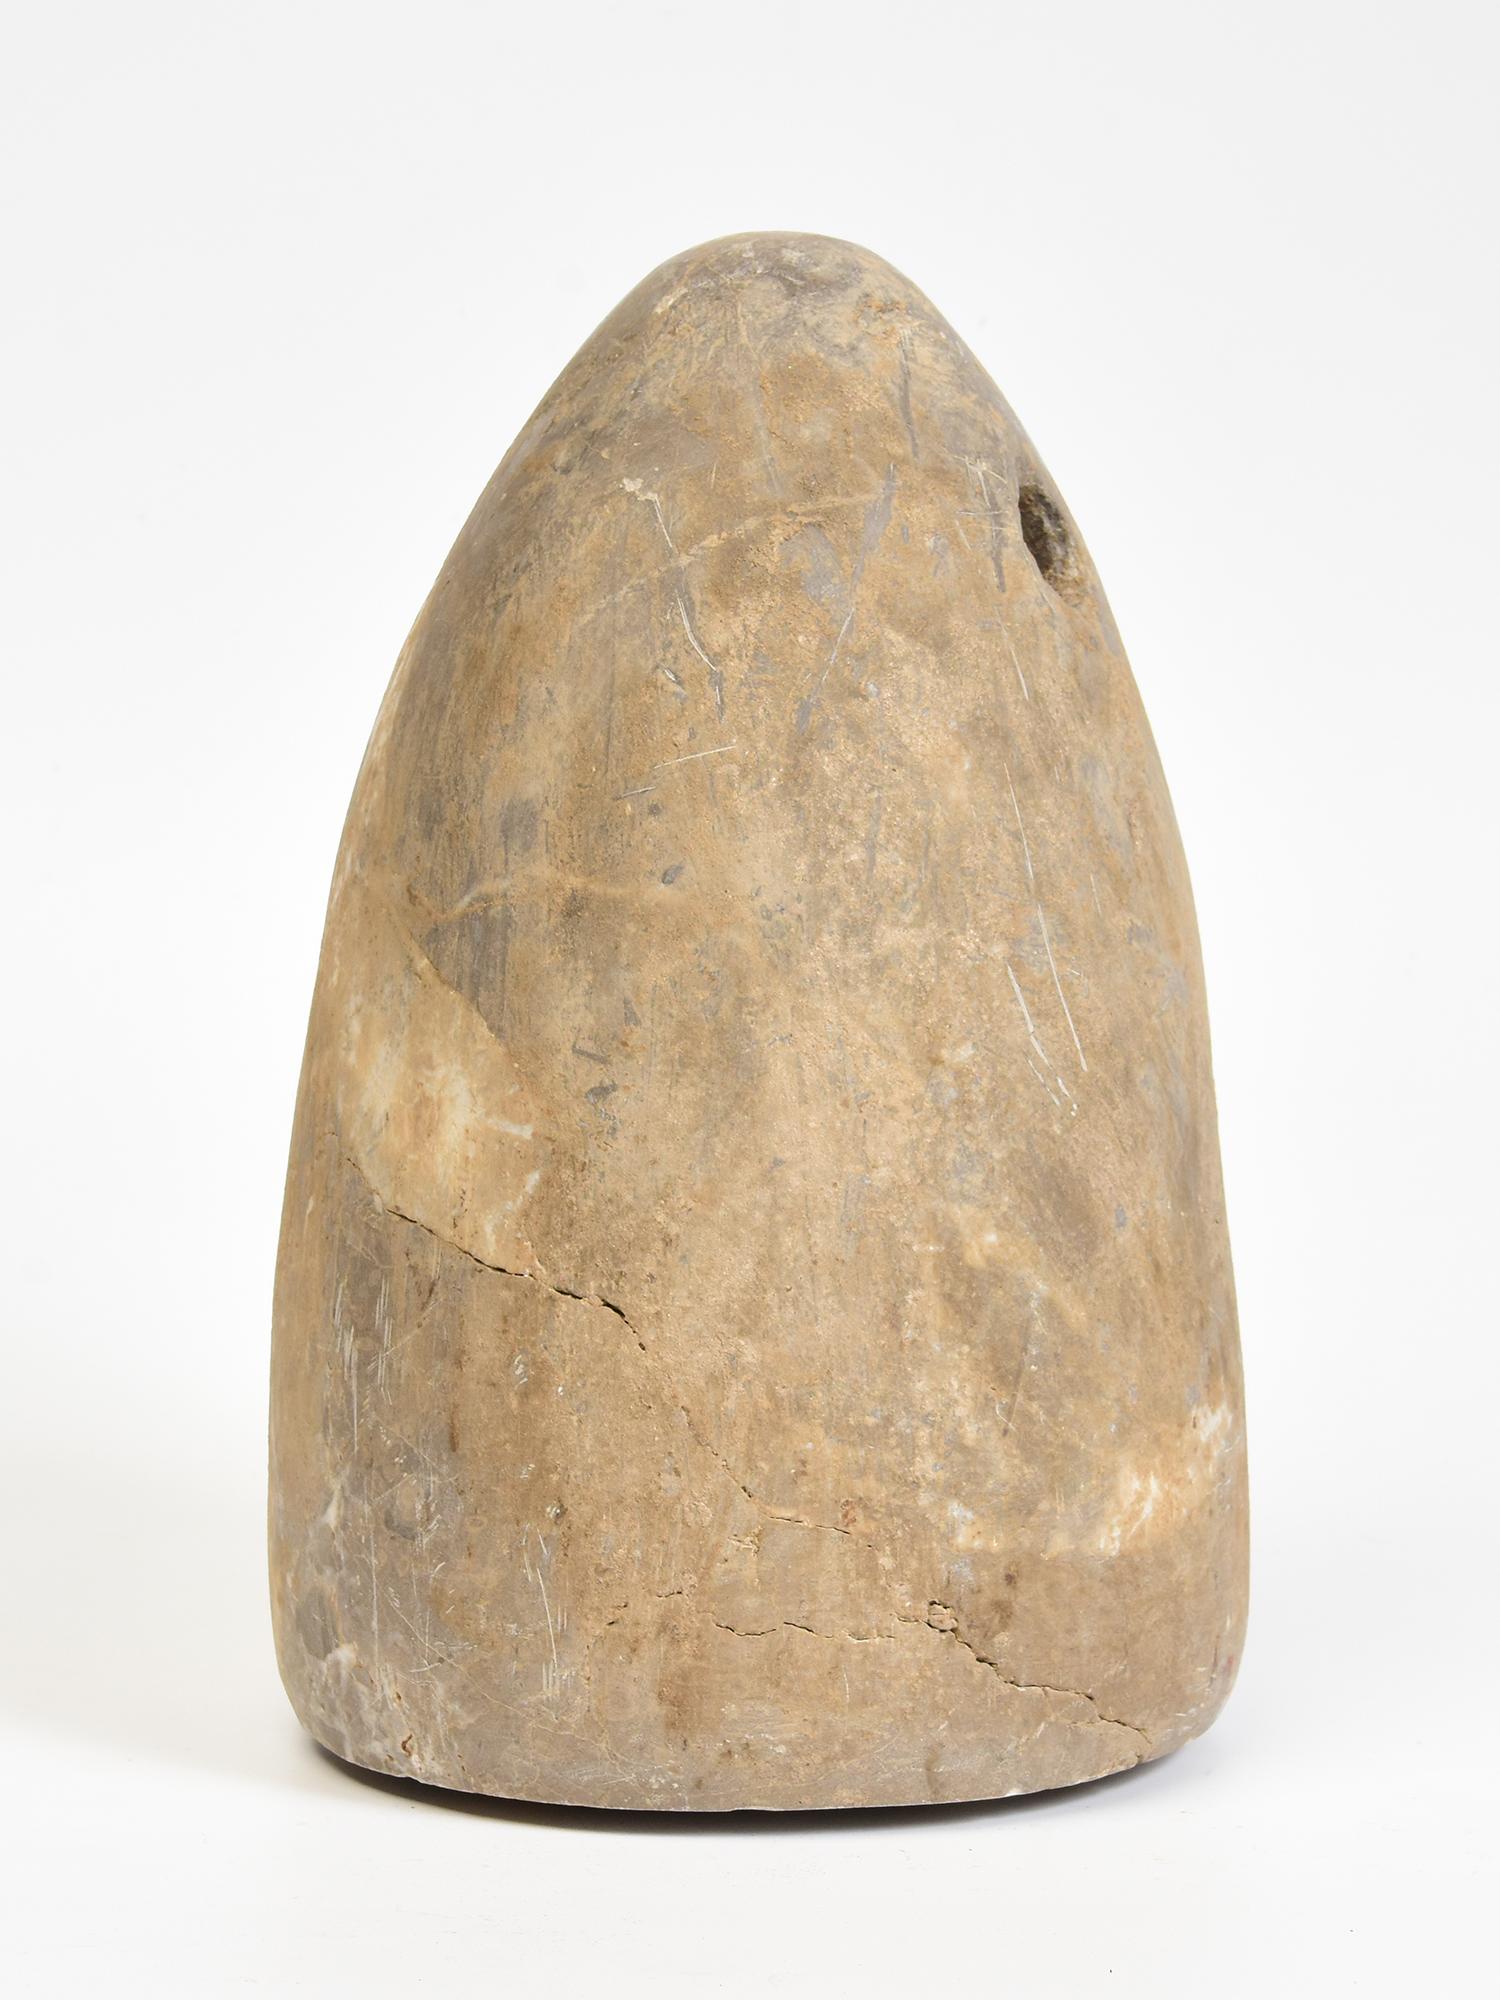 2-3 B.C., Afghanistan, Rare Bactrian Hardstone Weight 1